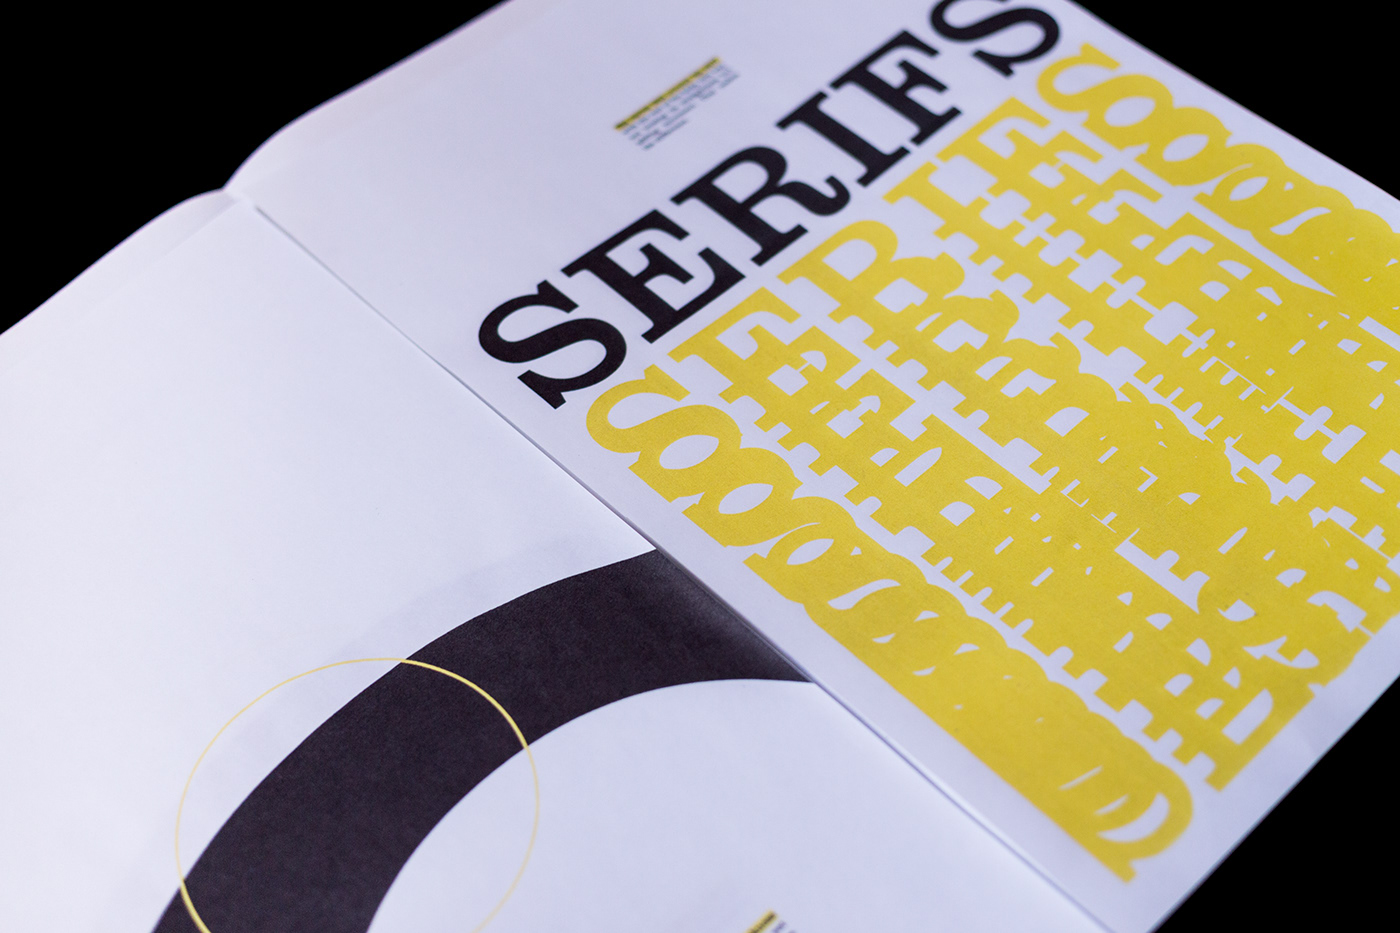 fonts newspaper periodico Diseño editorial editorial design  desing graphic grafico yellow amarillo